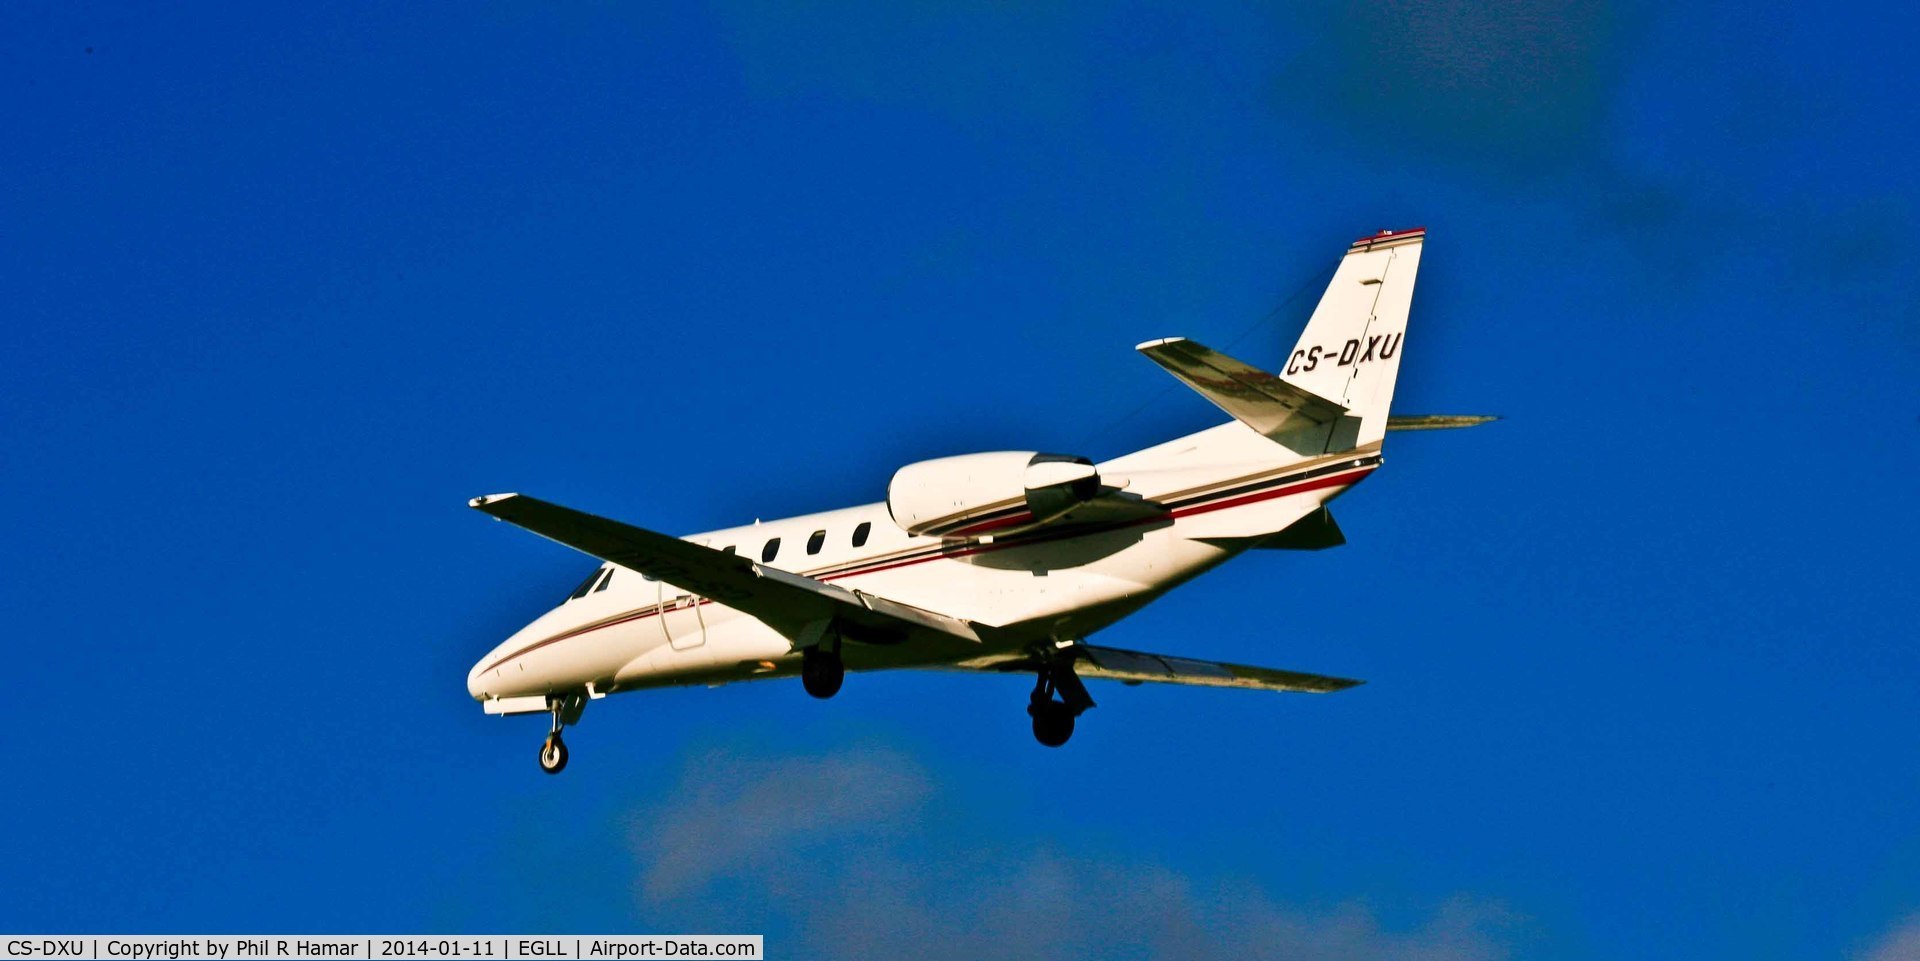 CS-DXU, 2008 Cessna 560 Citation Excel C/N 560-5775, Cessna Citation XL, (CS-DXU) c/n 560-5775. on approach to land on 27L Heathrow. © PhilRHamar